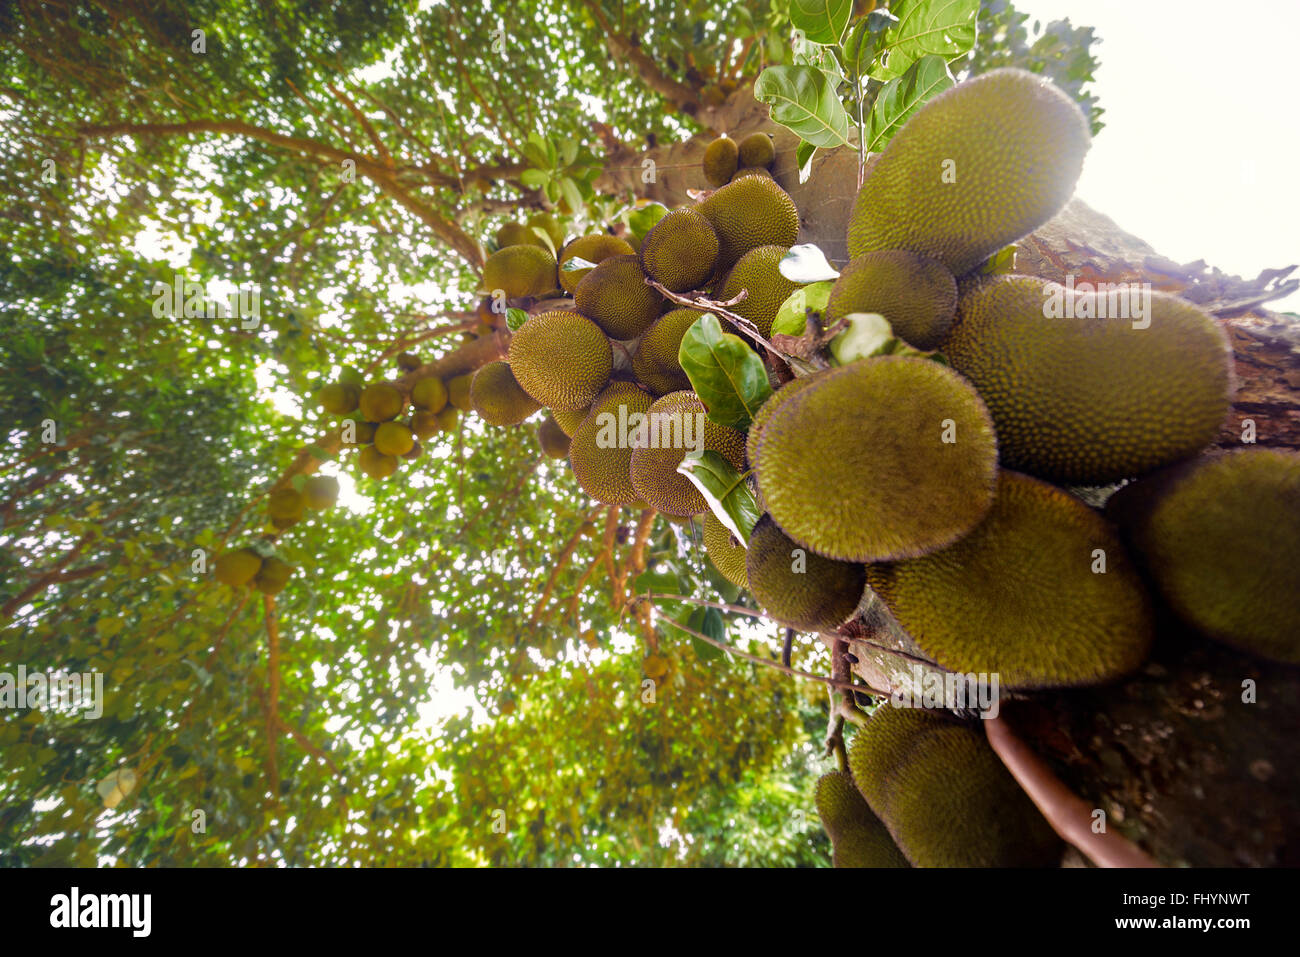 Jackfruit (Artocarpus heterophyllus) tree with fruit growing, low angle view. Stock Photo